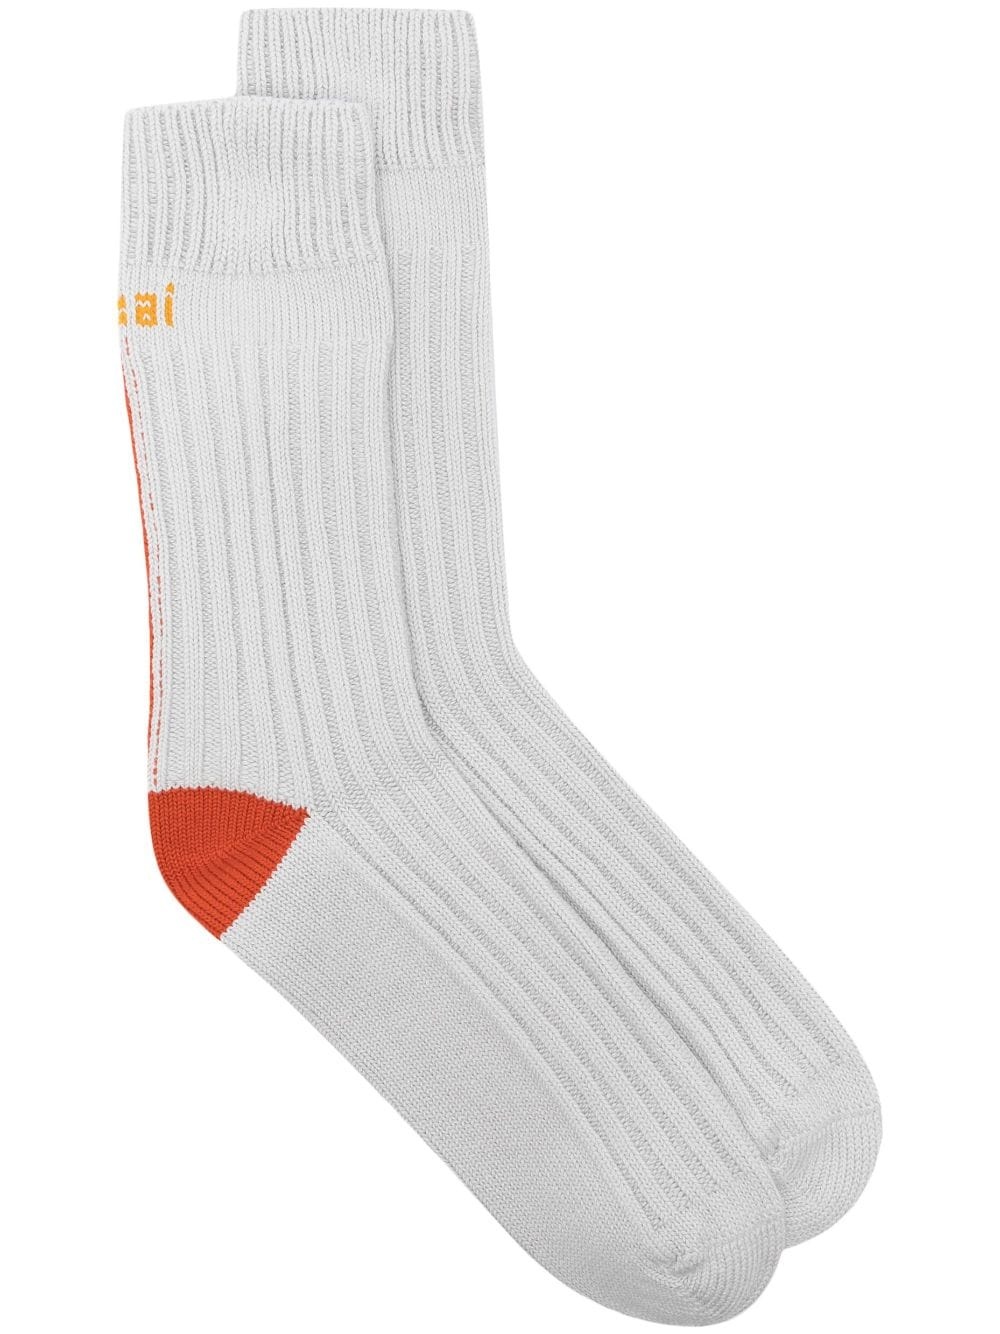 Logo socks - 1